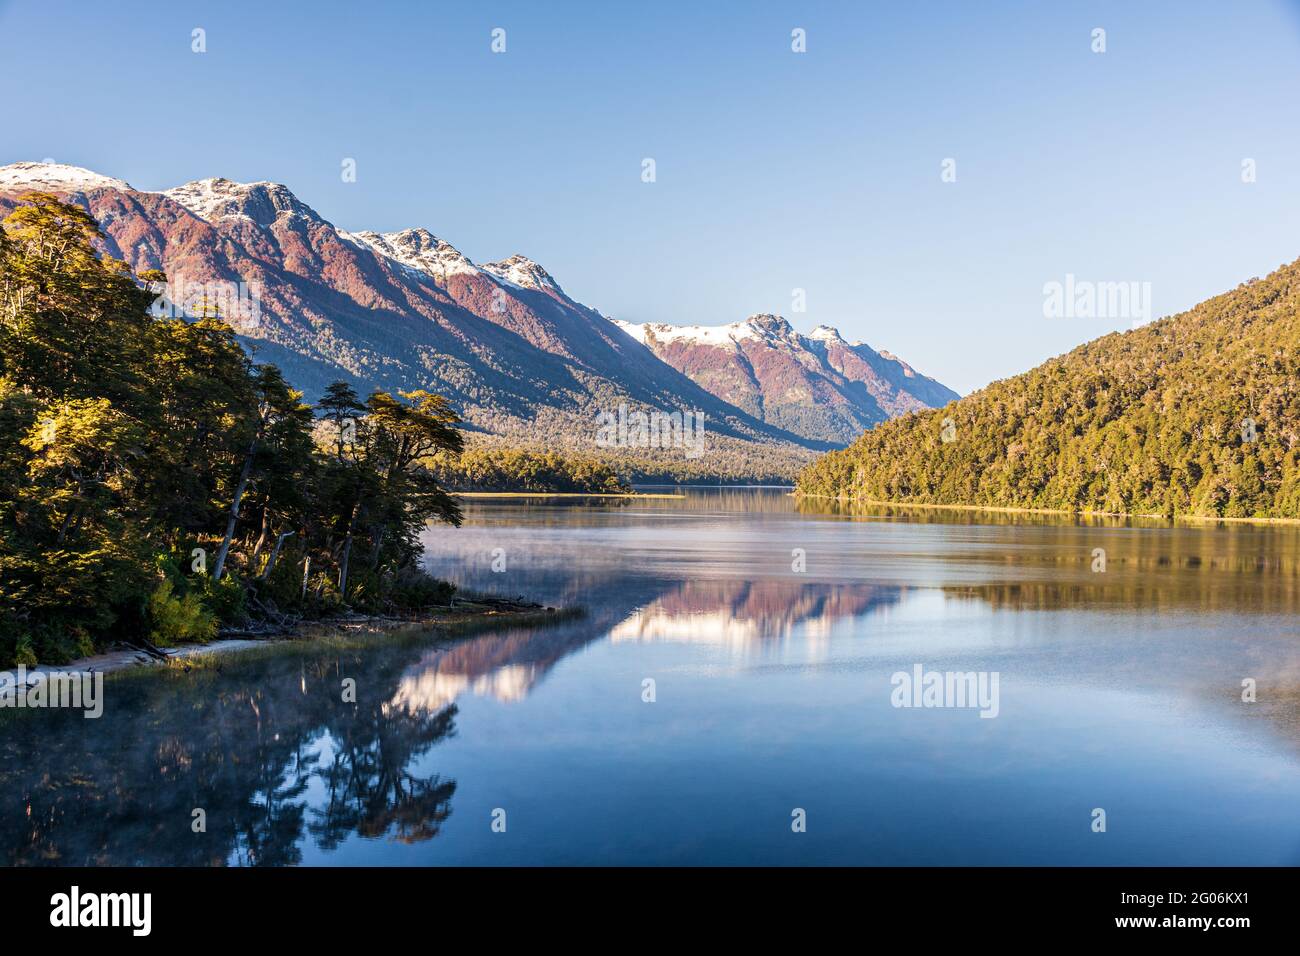 Beautiful shot of the Lago Moreno lake near trees in Nahuel Huapi National Park, Argentina Stock Photo